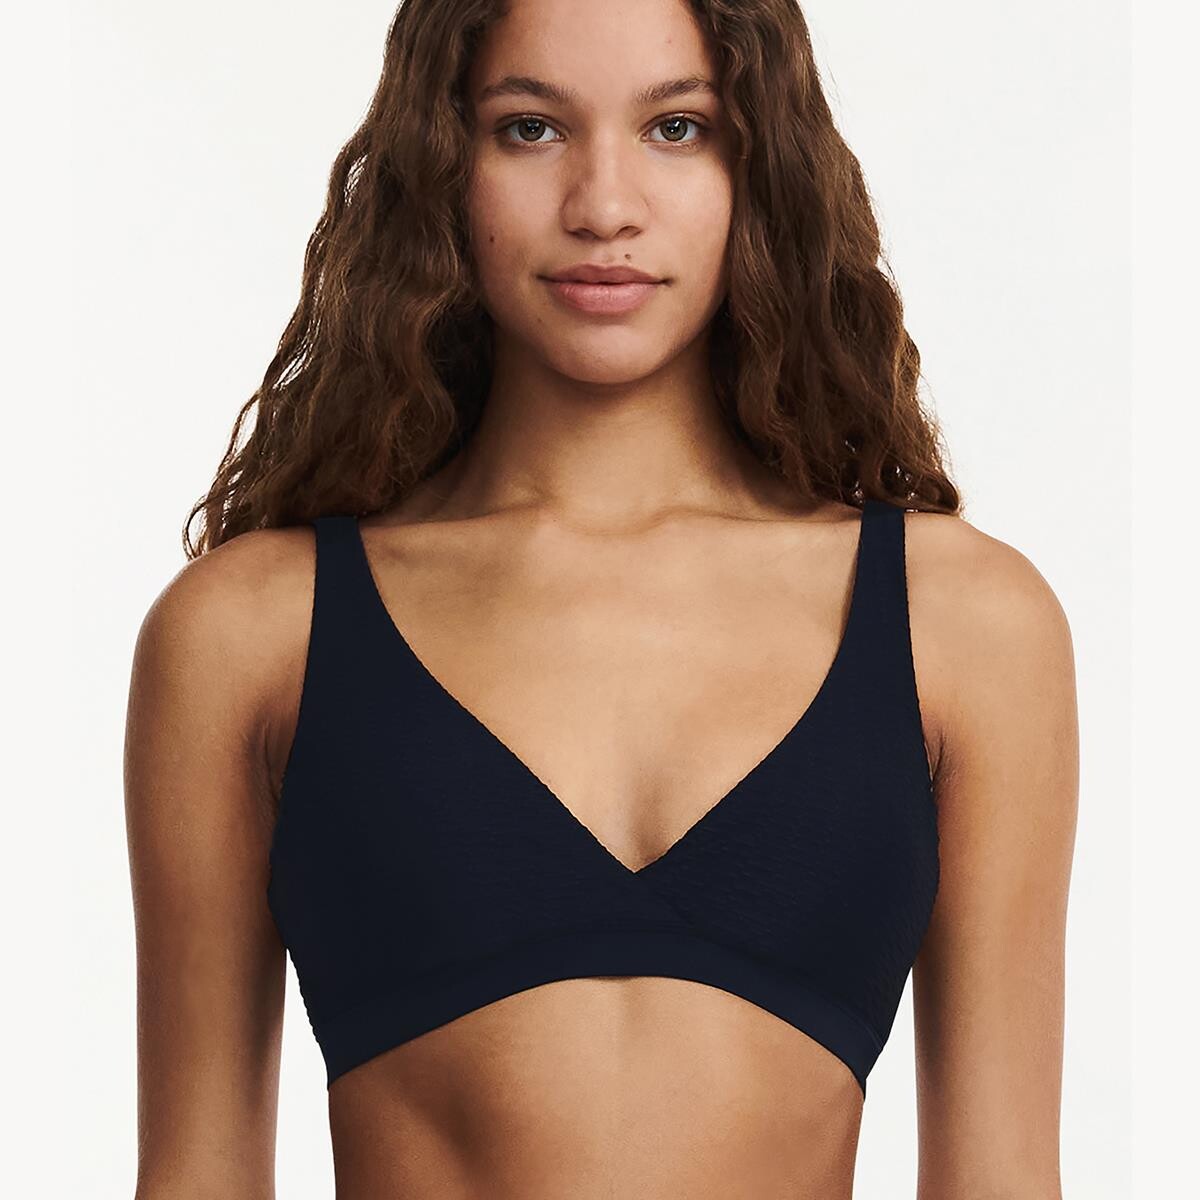 Femilet Bonaire Bikinitop, Farve: Sort, Størrelse: 42, Dame